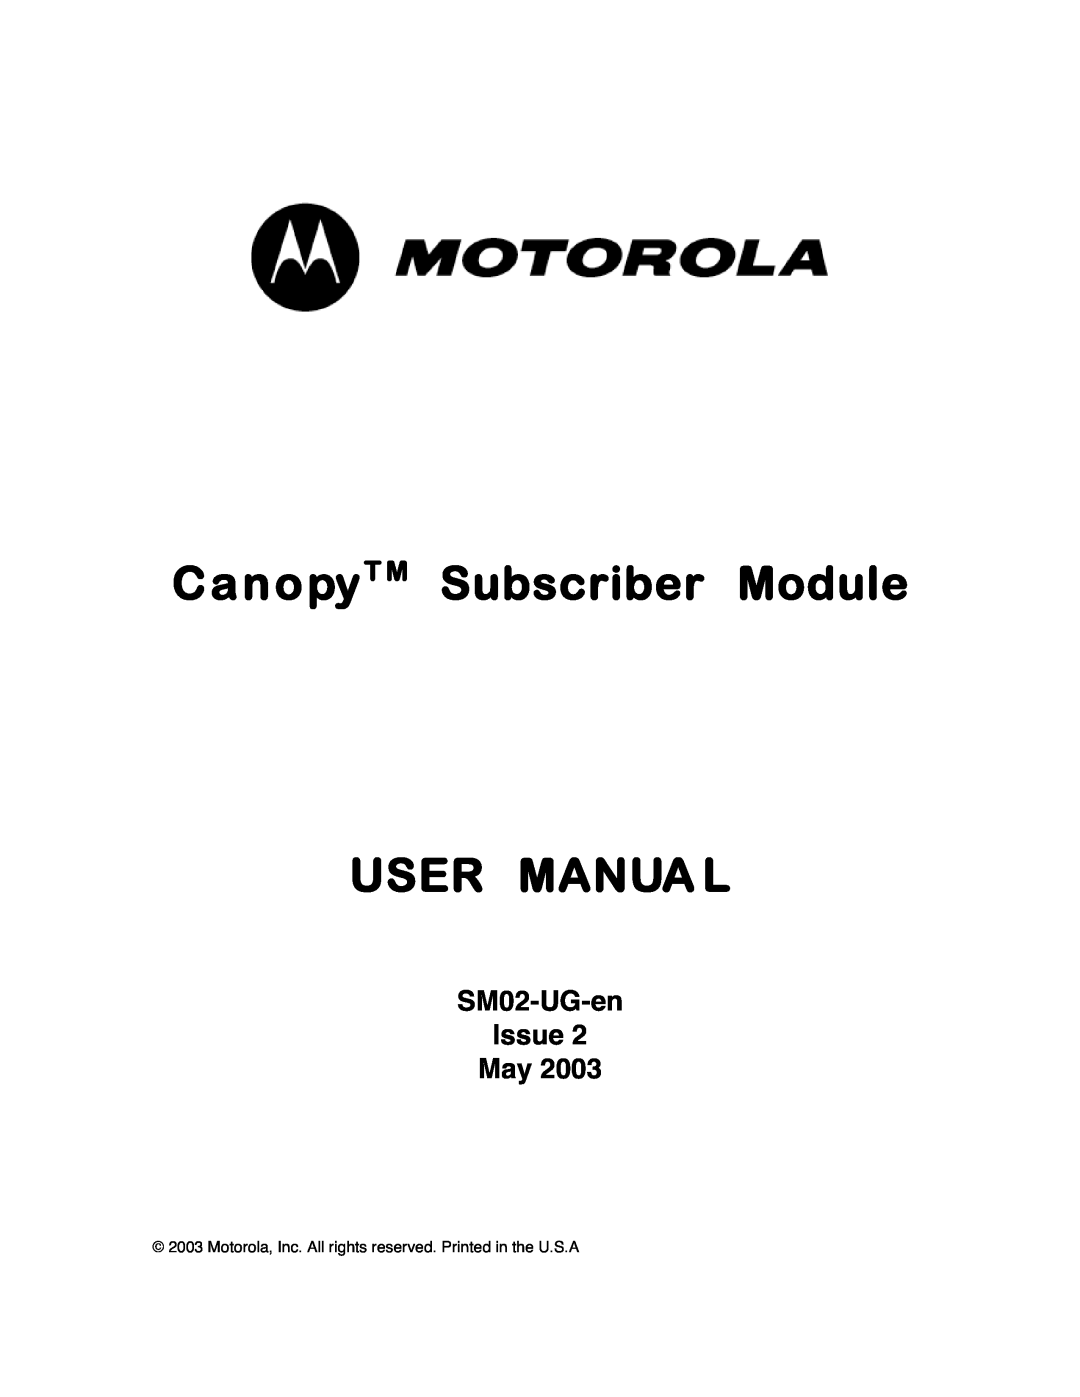 Motorola user manual SM02-UG-en Issue May, CanopyT M Subscriber Module, User Manua L 